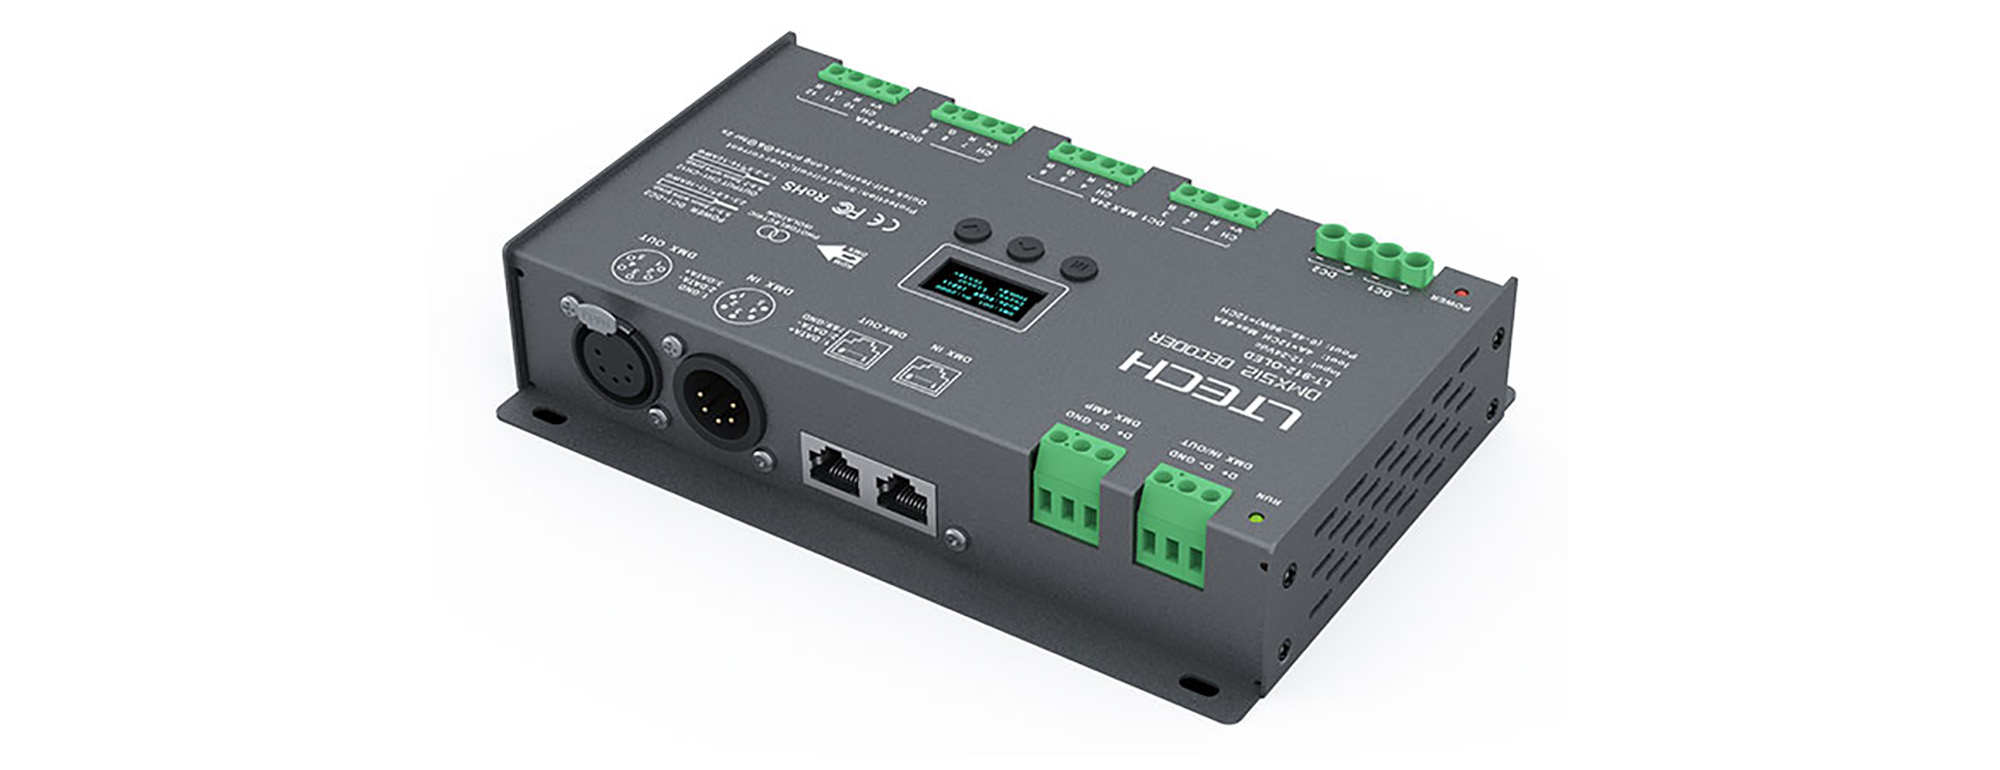 912-OLED  12Ch 4A CV DMX Decoder, 1152W Max.Power, XLR-5 Green Terminal & RJ45 Port, Self testing, DMX512/RDM I/P signal, IP20.